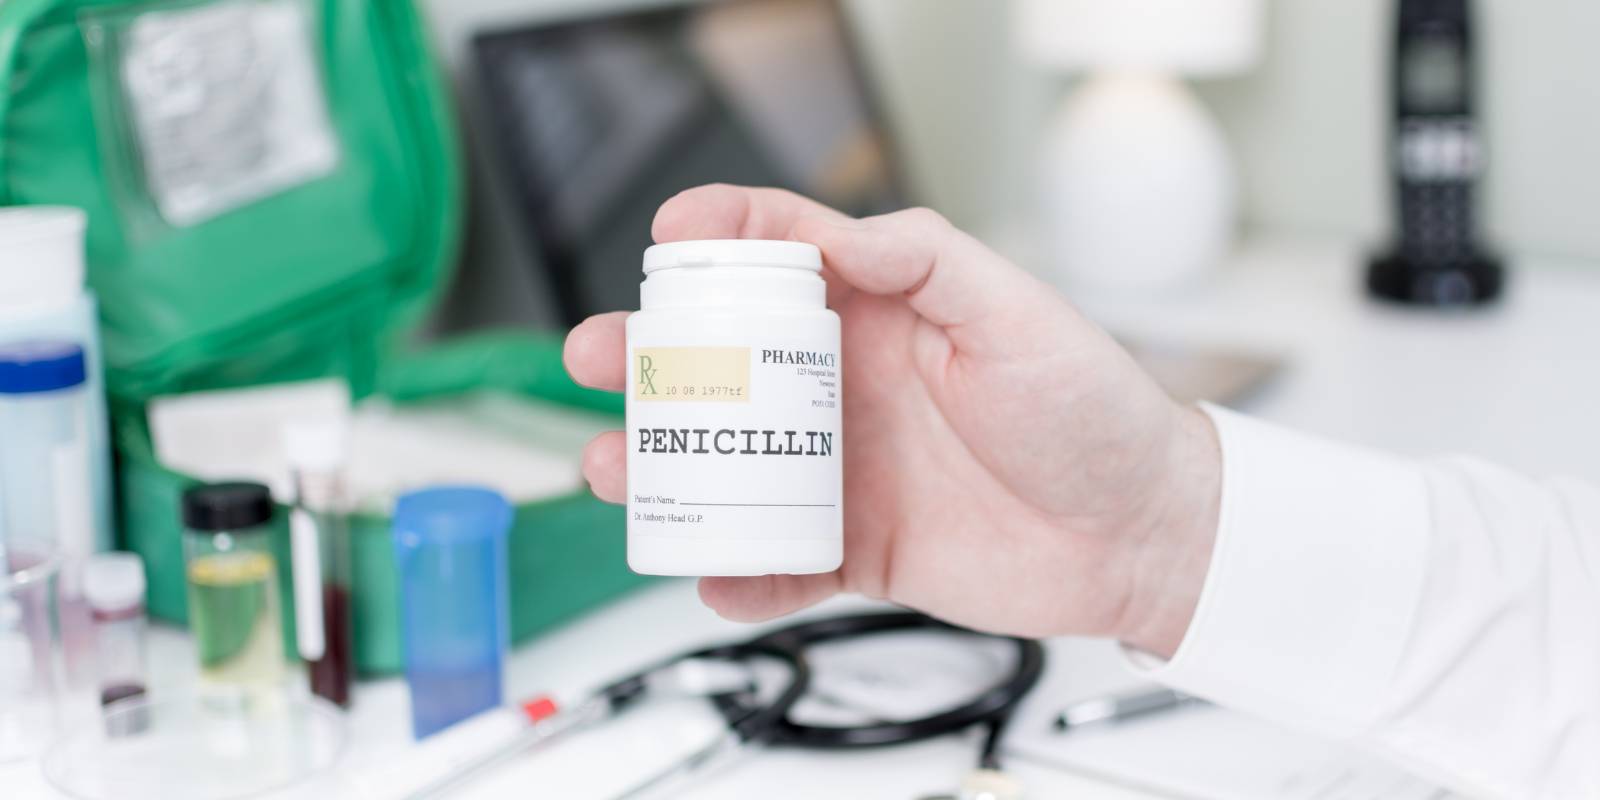 September 28th: Fleming Revolutionized Medicine With Penicillin